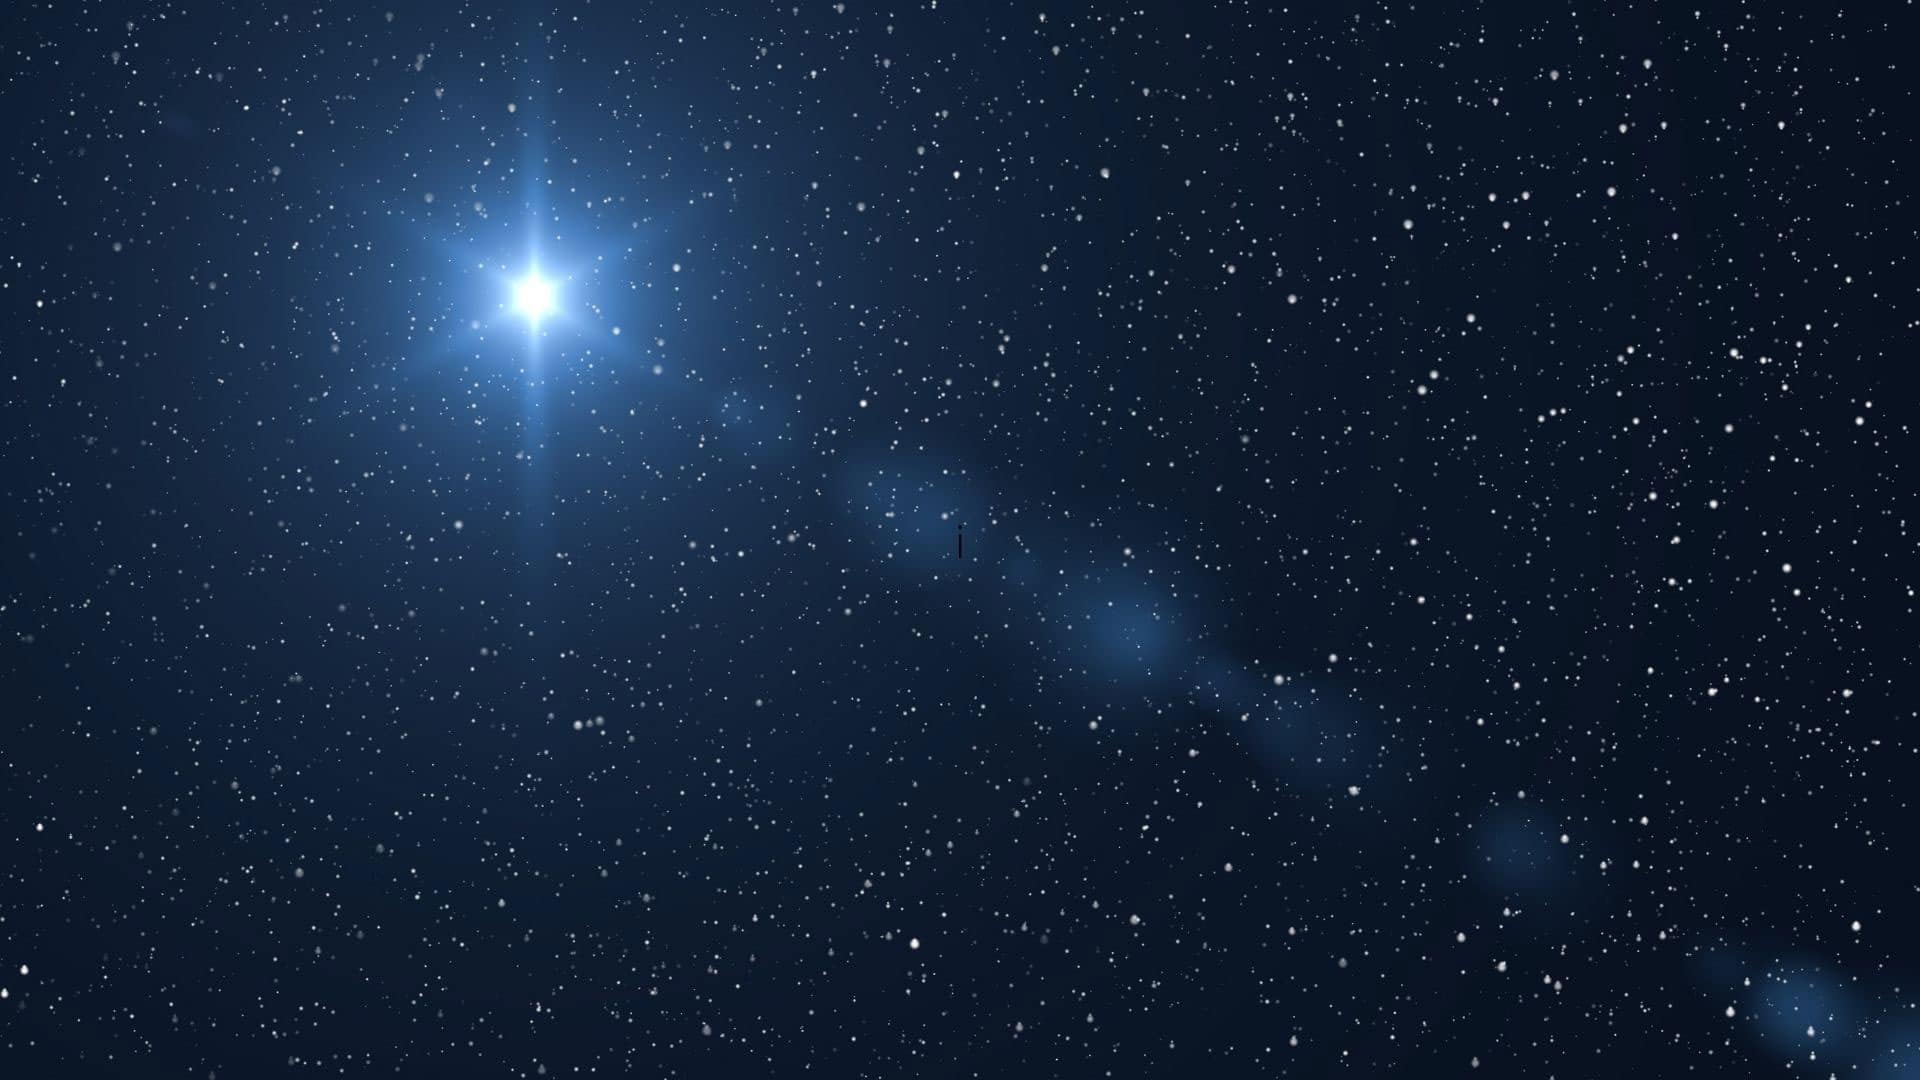 Image illustrating neutron star